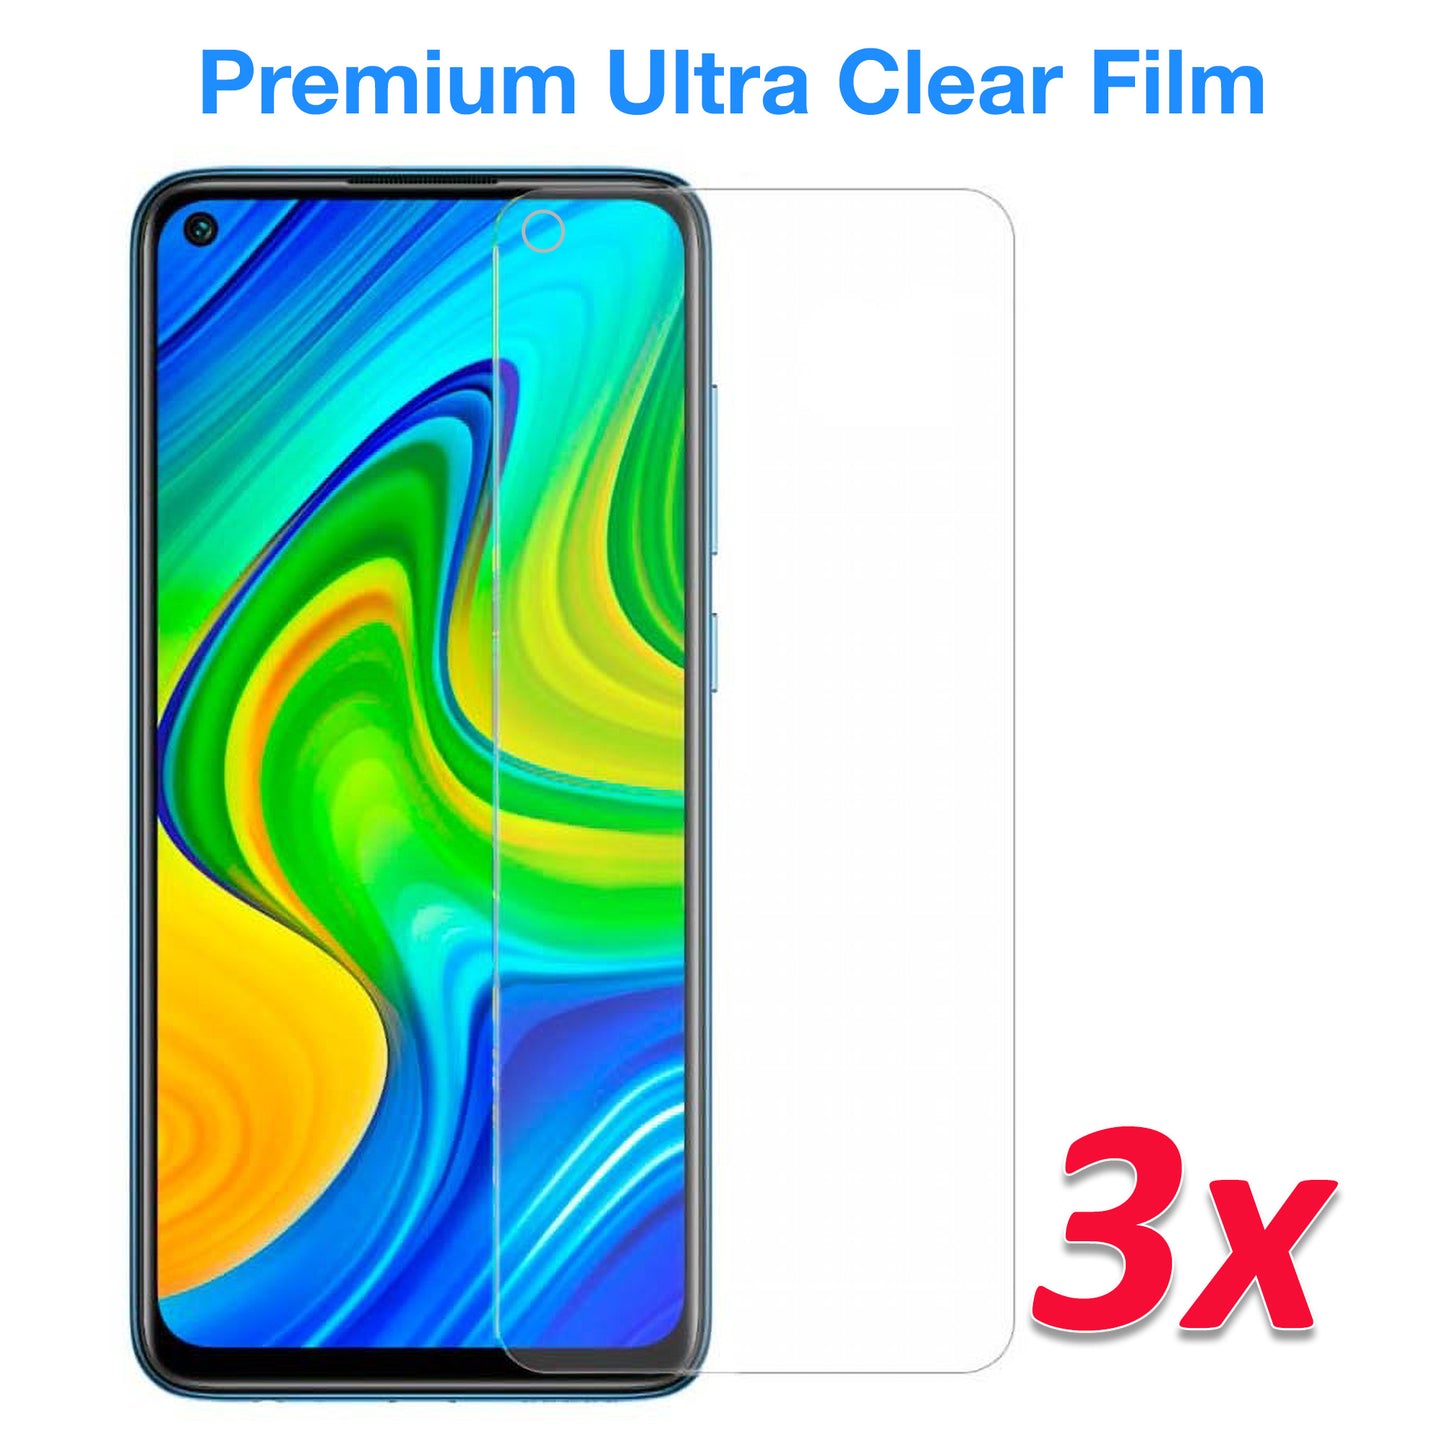 [3 Pack] MEZON Xiaomi Redmi Note 9T Ultra Clear Screen Protector Case Friendly Film (Redmi Note 9T, Clear)